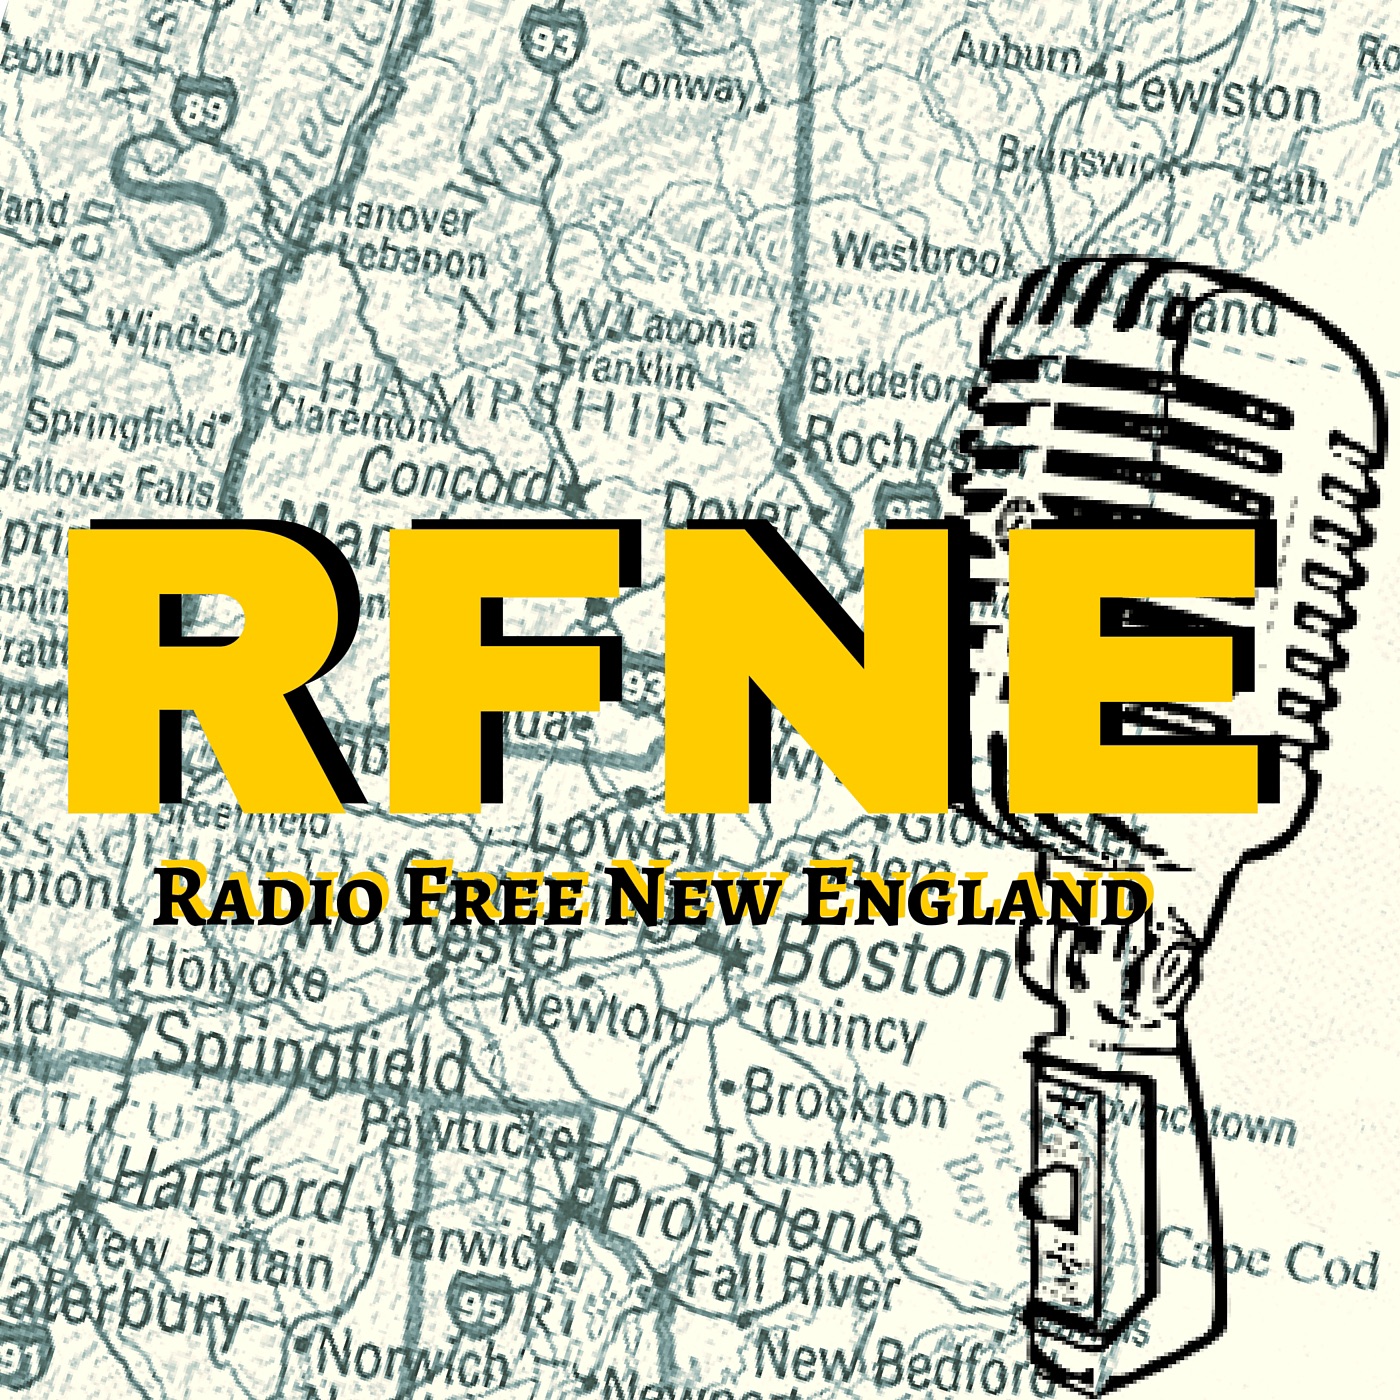 Radio Free New England